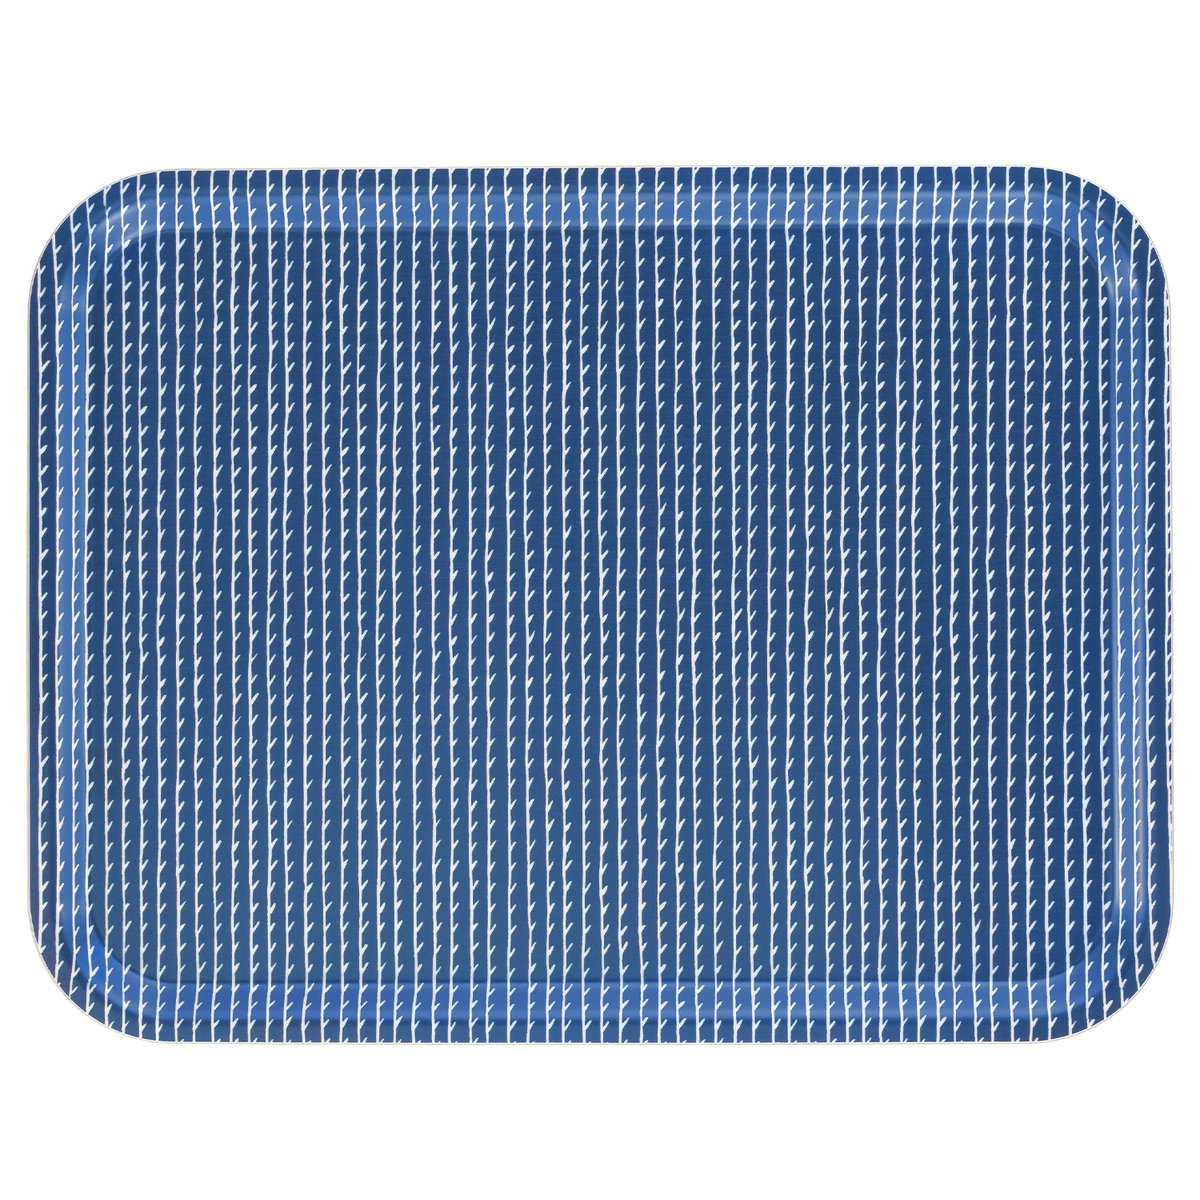 Rivi tray, 43 x 33 cm, blue - white